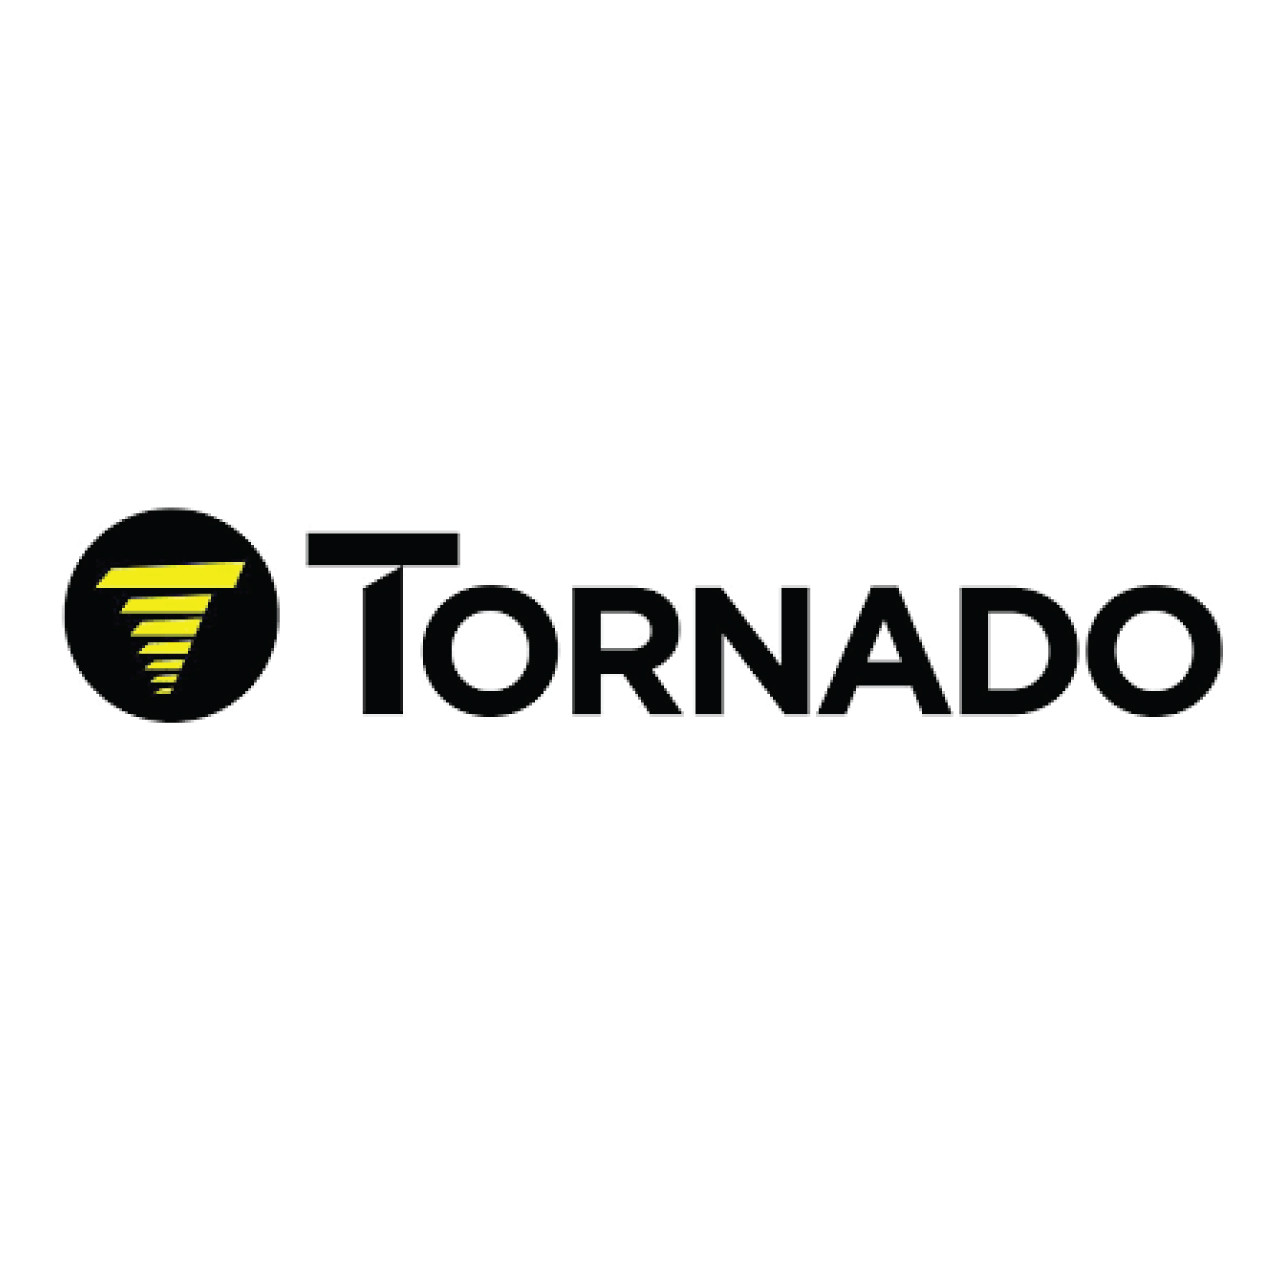 X9231, Tornado X9231, Tornado LABEL INSTRUCTION POWR-ZONE OZONE GENERATOR, Tornado parts